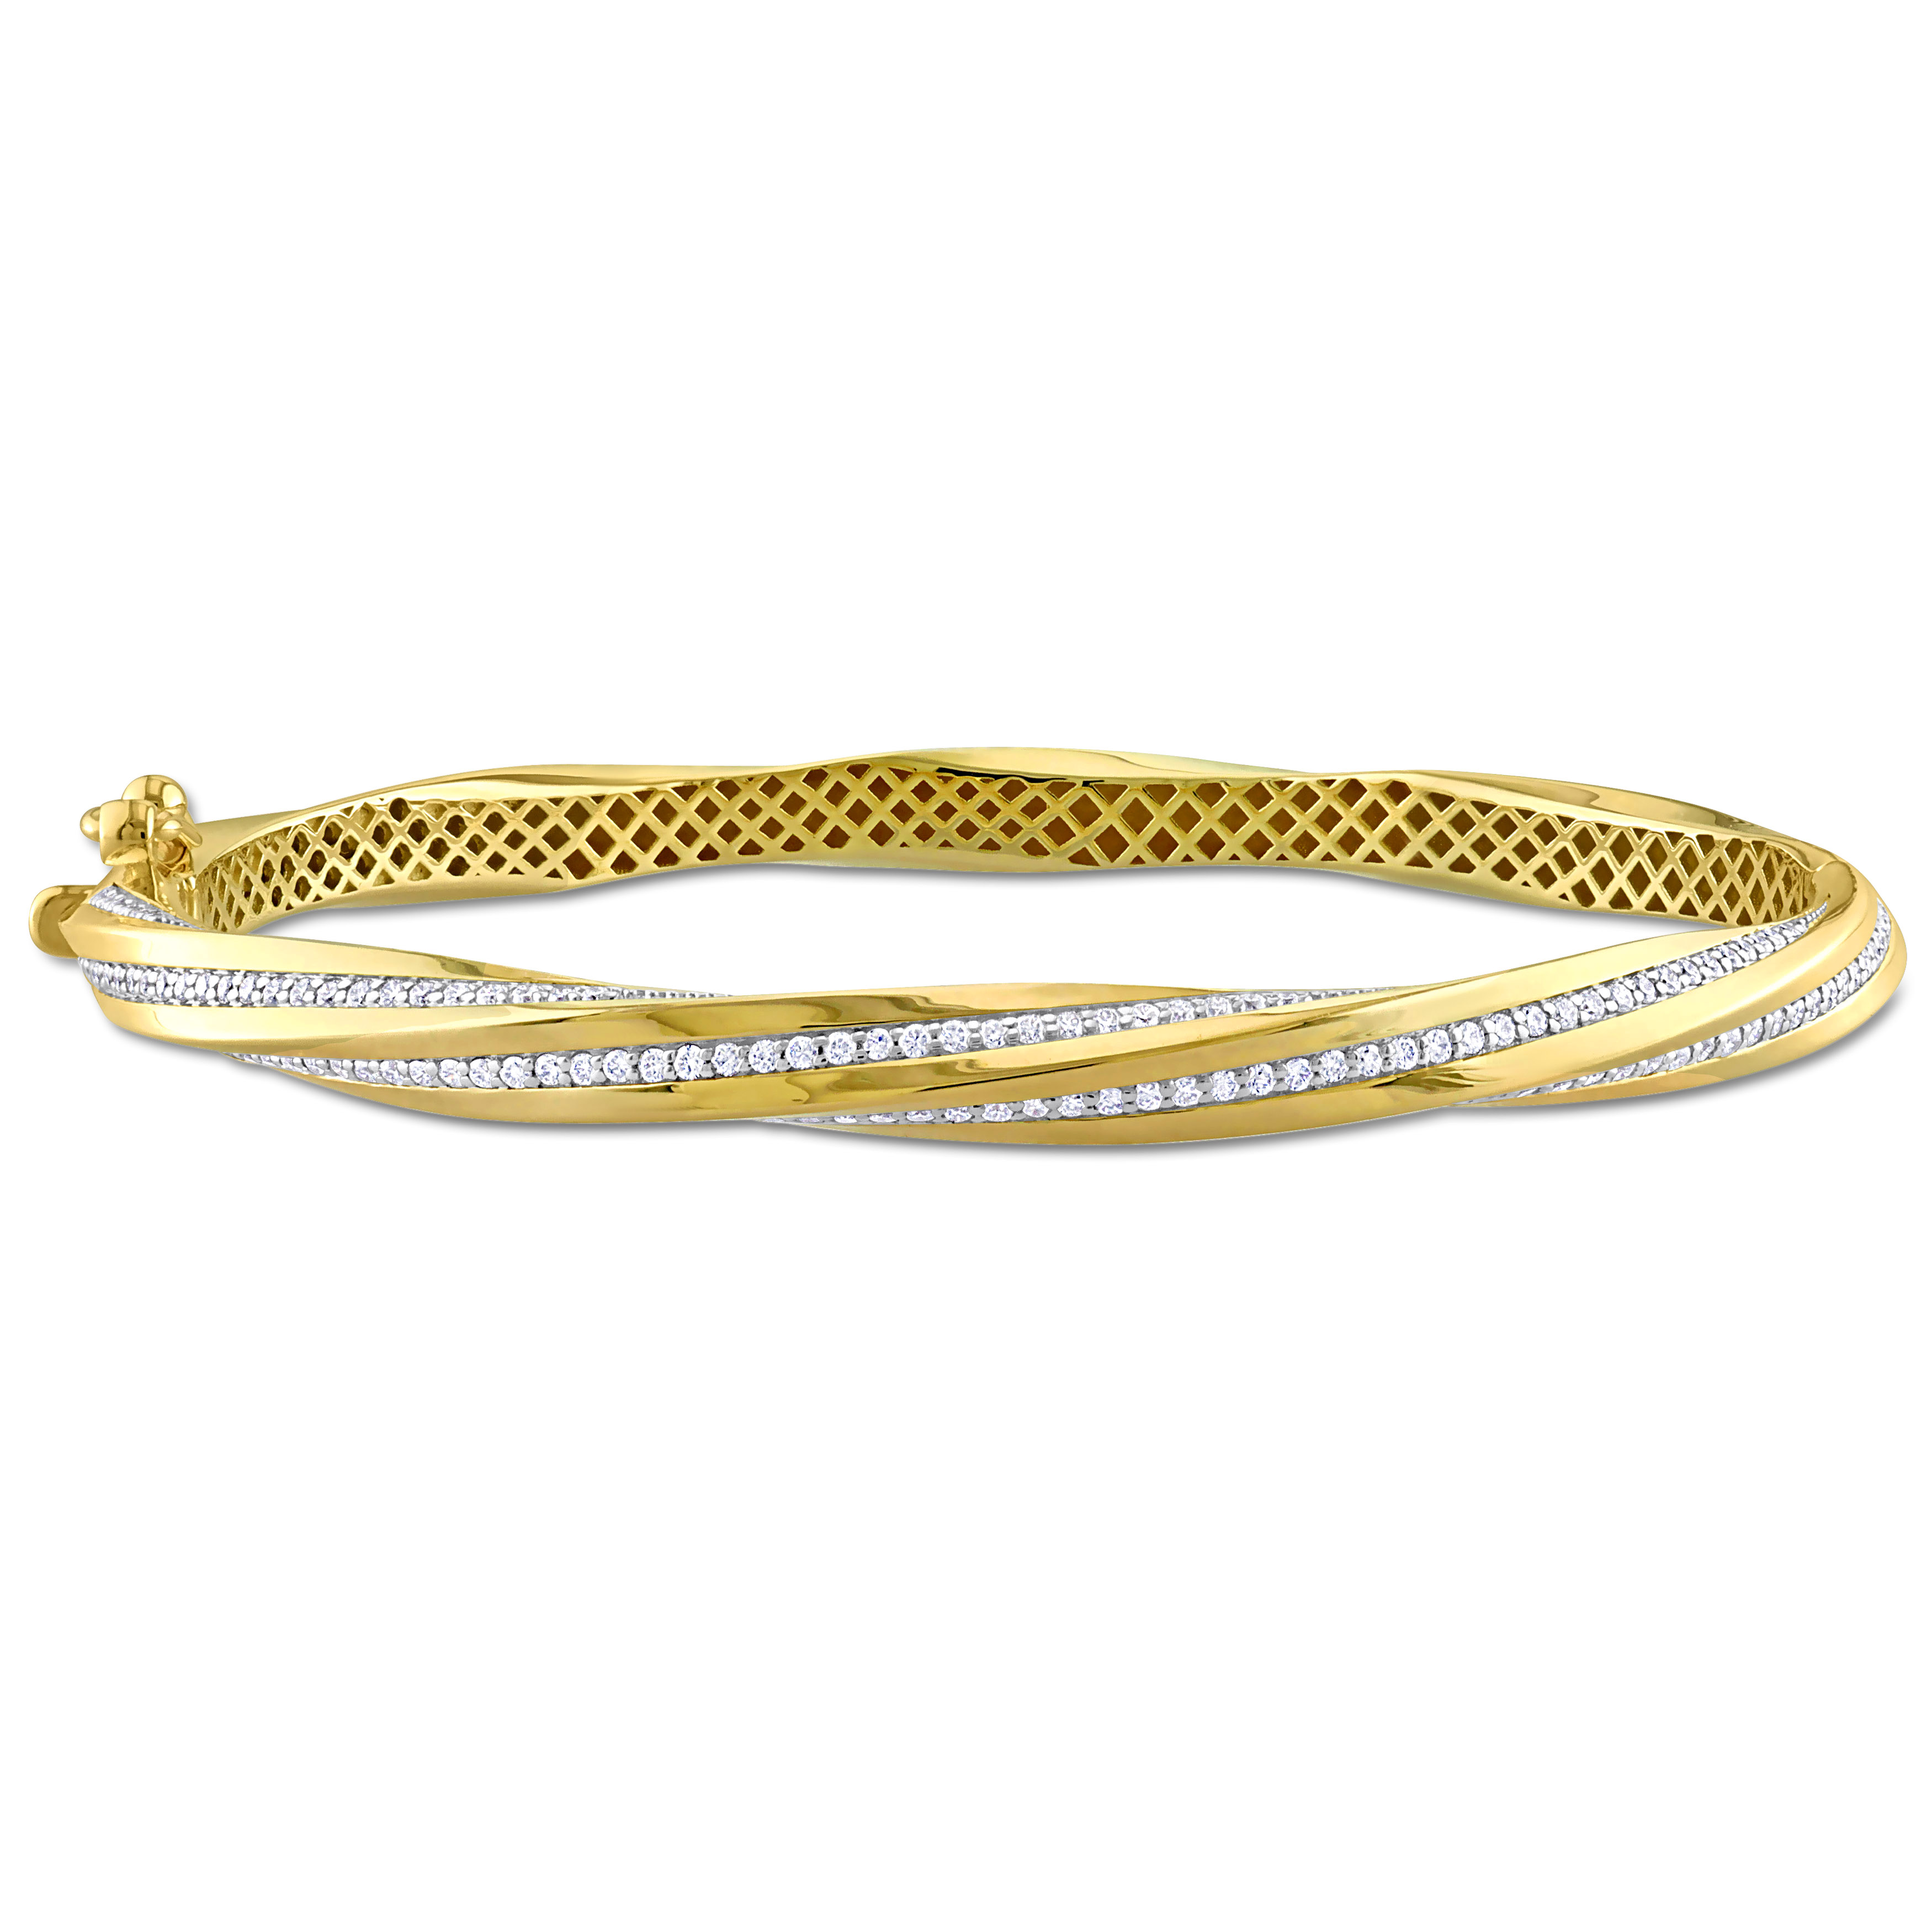 5/8 CT TDW Diamond Twisted Bracelet in 14k Yellow Gold - 7 in.